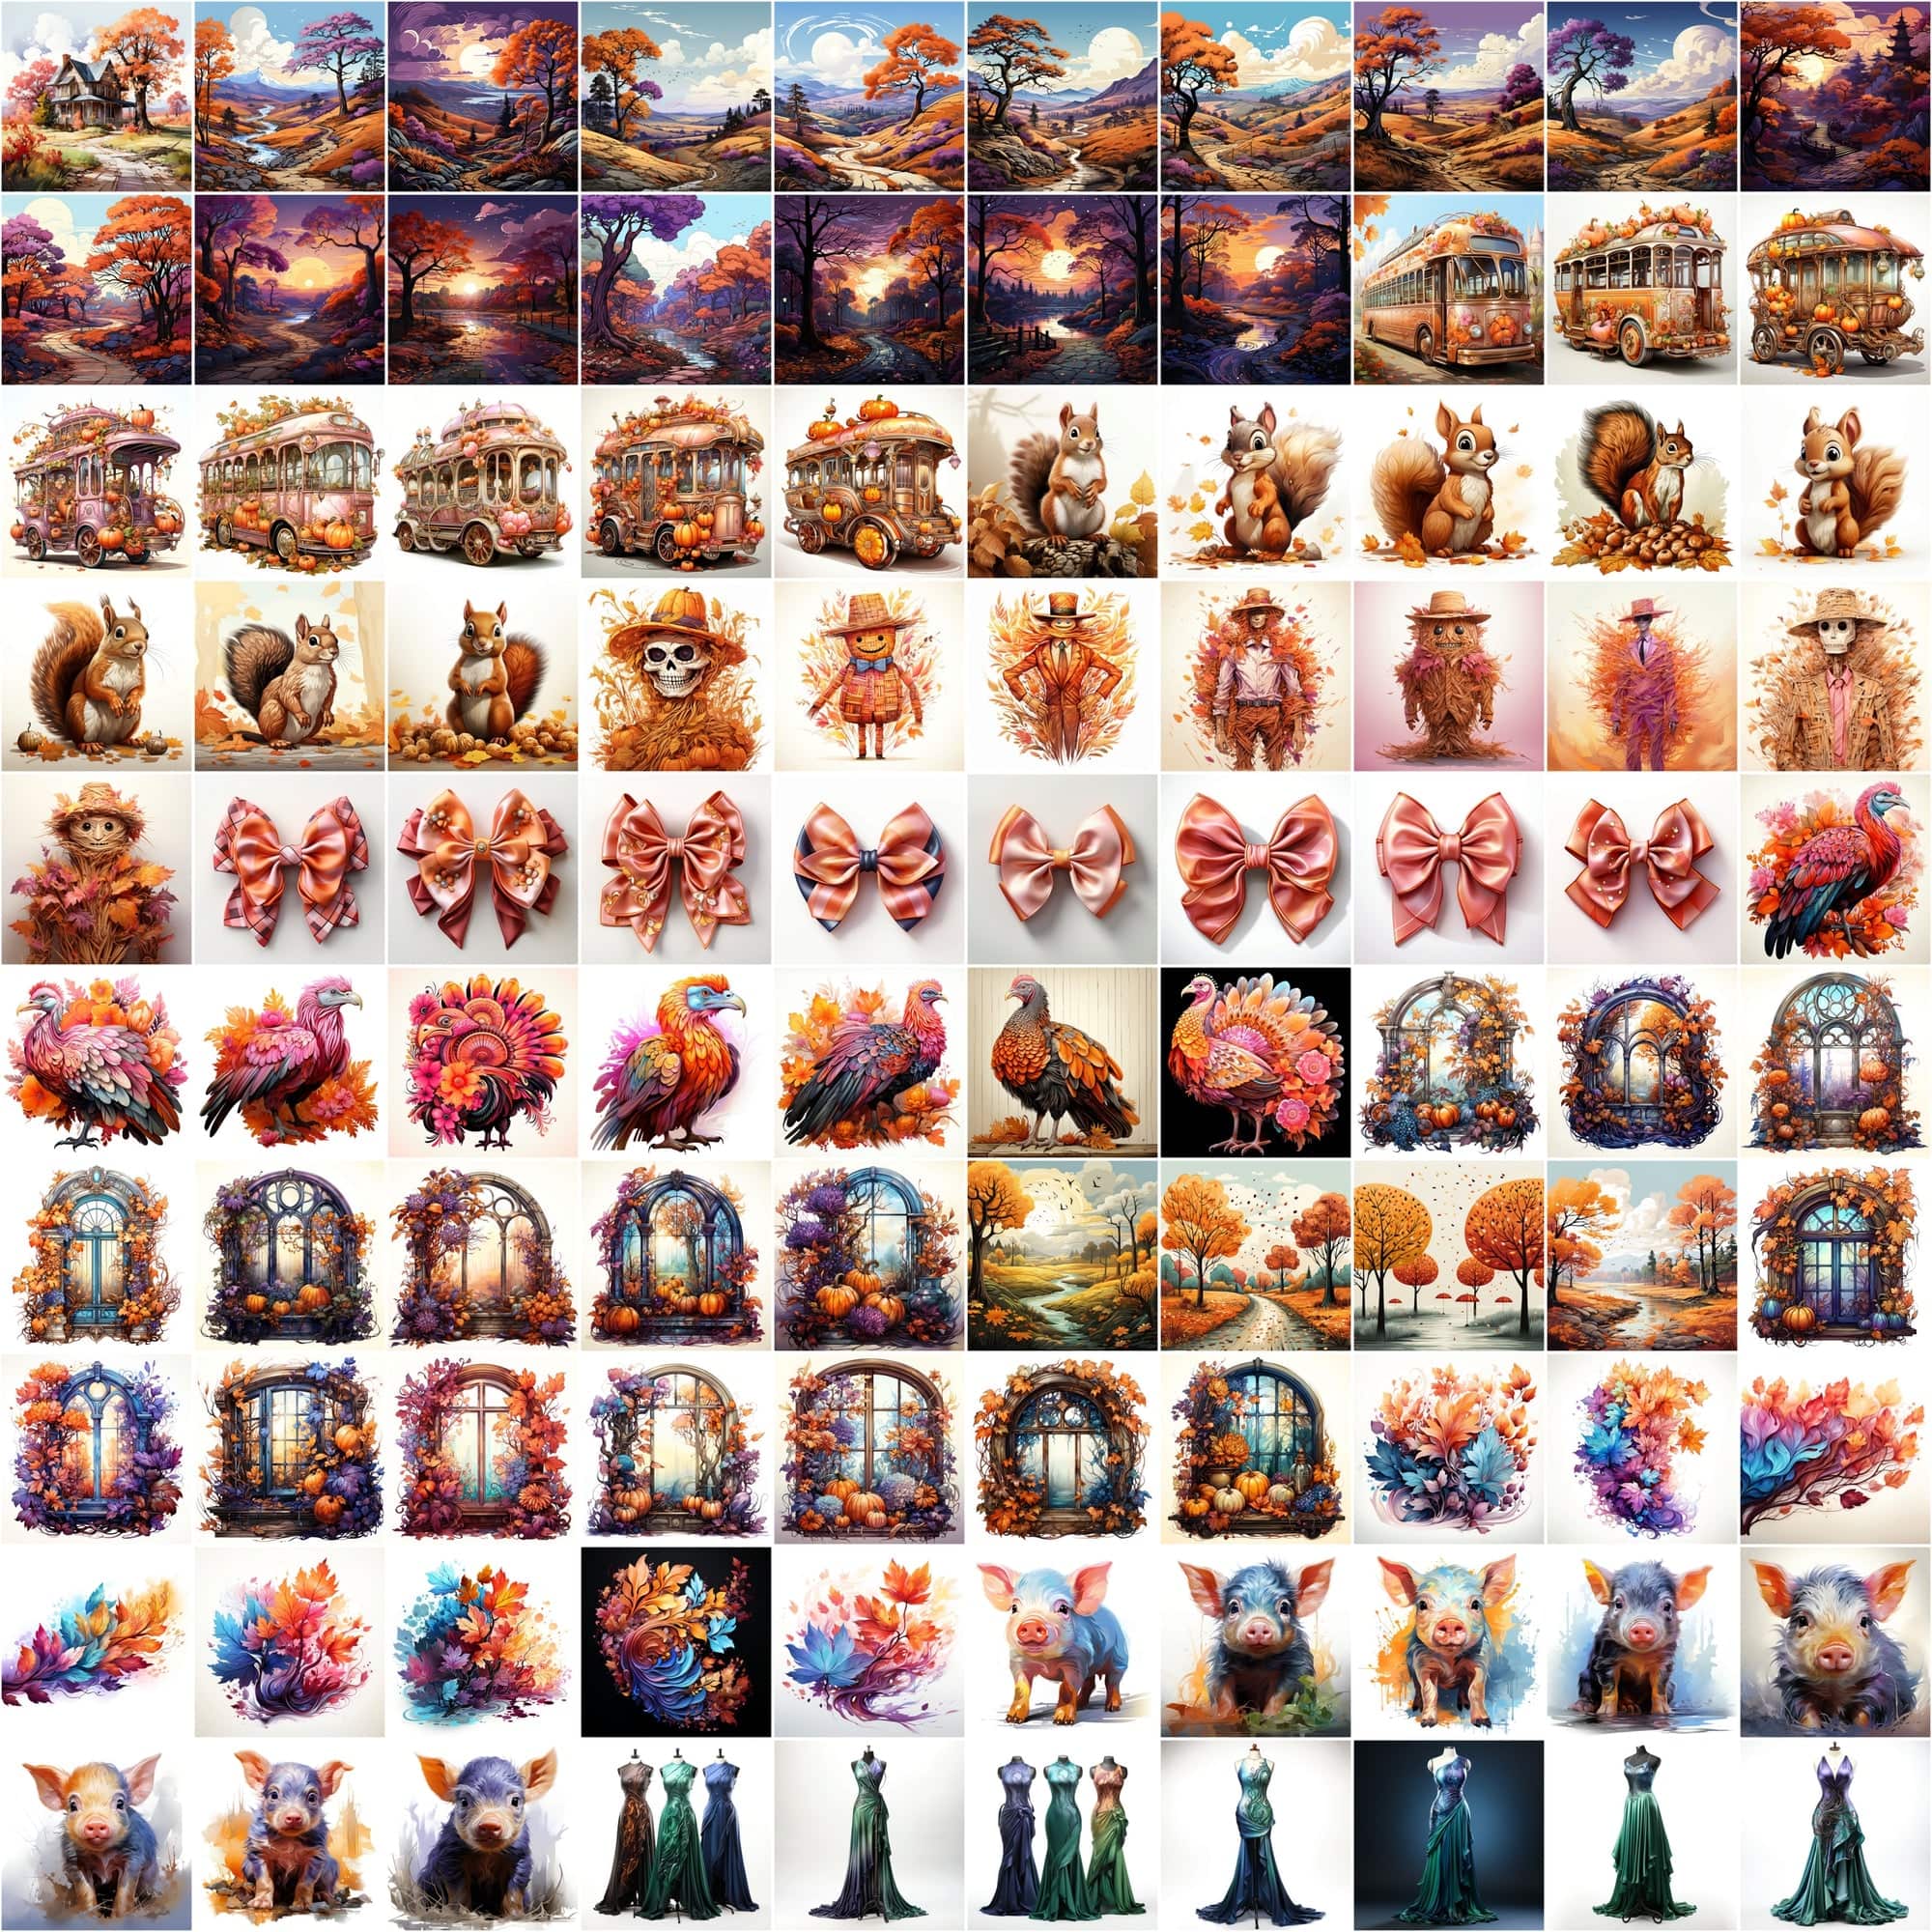 Mega Bundle: 3600 Images for All Your Needs with Commercial License Digital Download Sumobundle